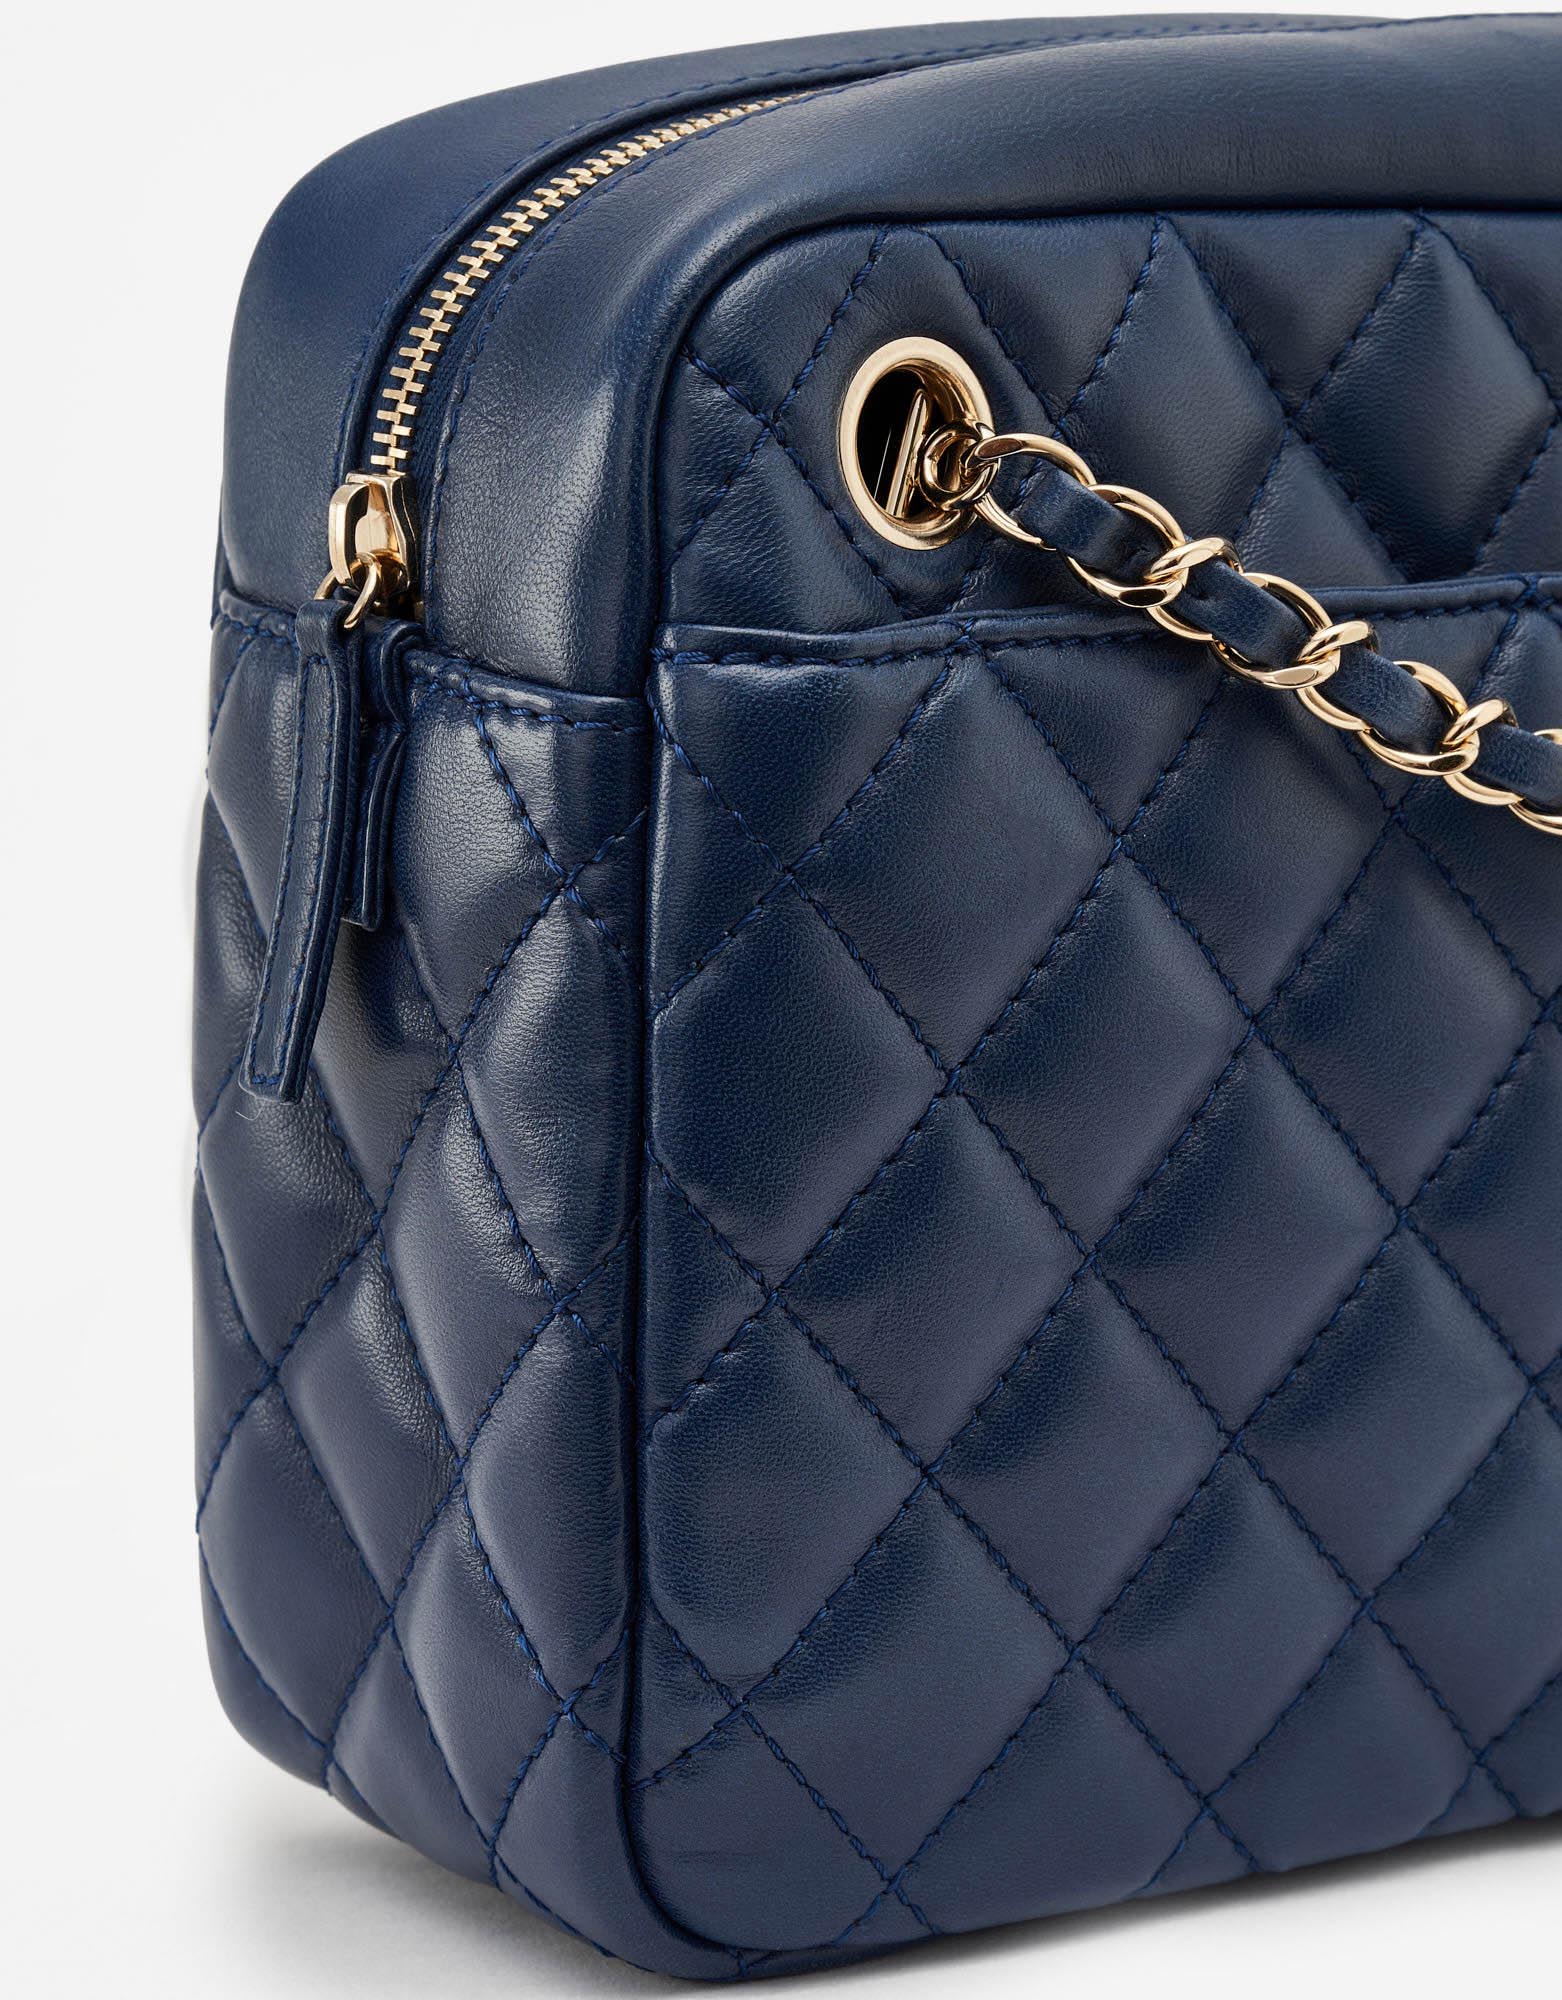 CHANEL - Handbag model Camera in navy blue quilted lea…